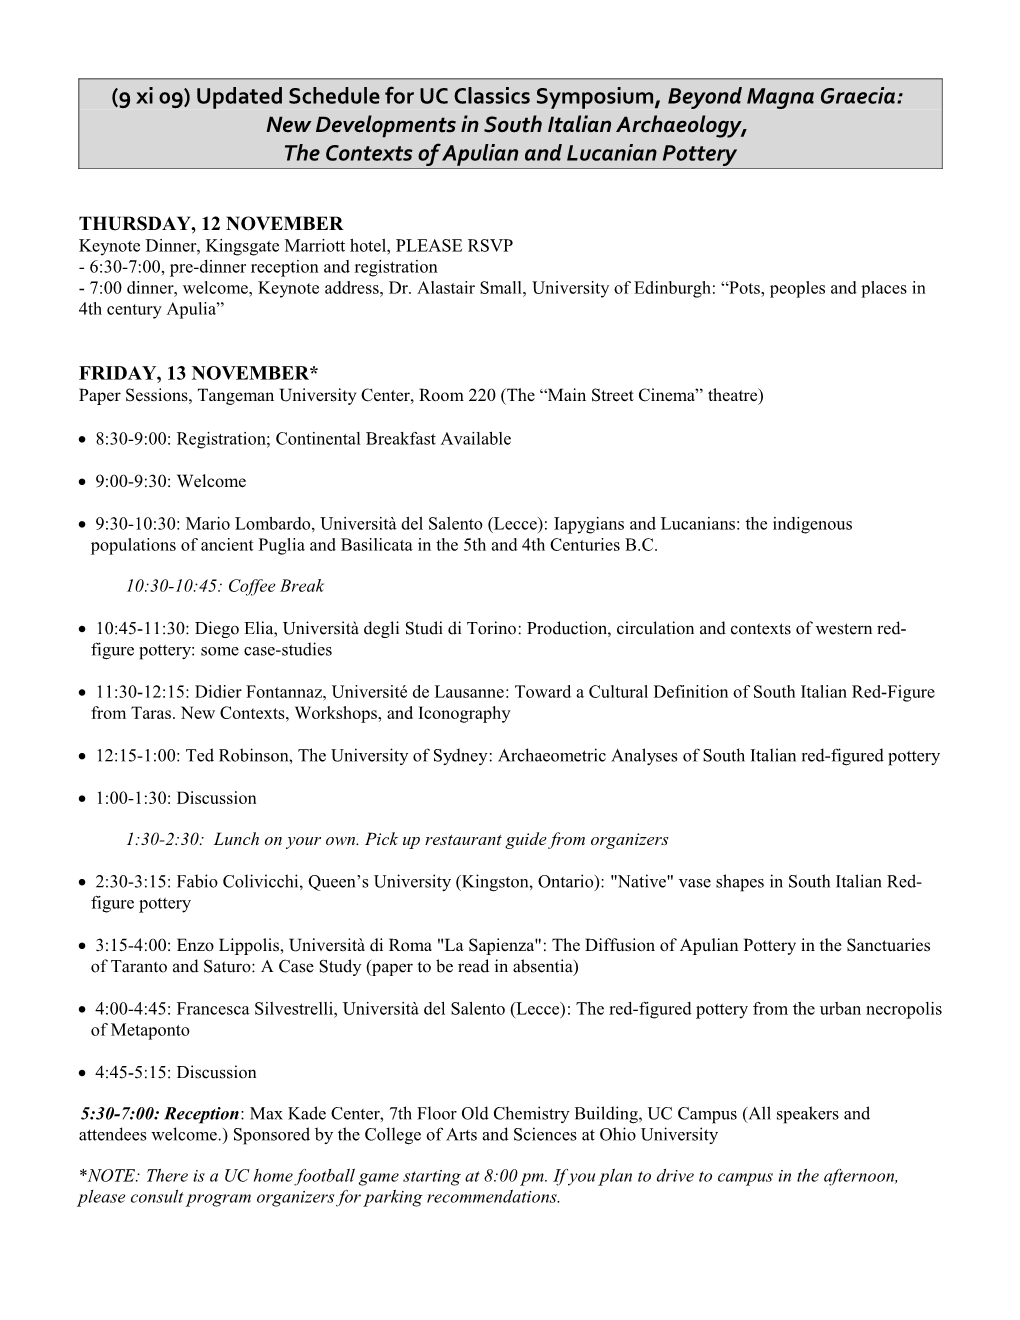 (9Xi09)Updated Schedule for UC Classics Symposium, Beyond Magna Graecia